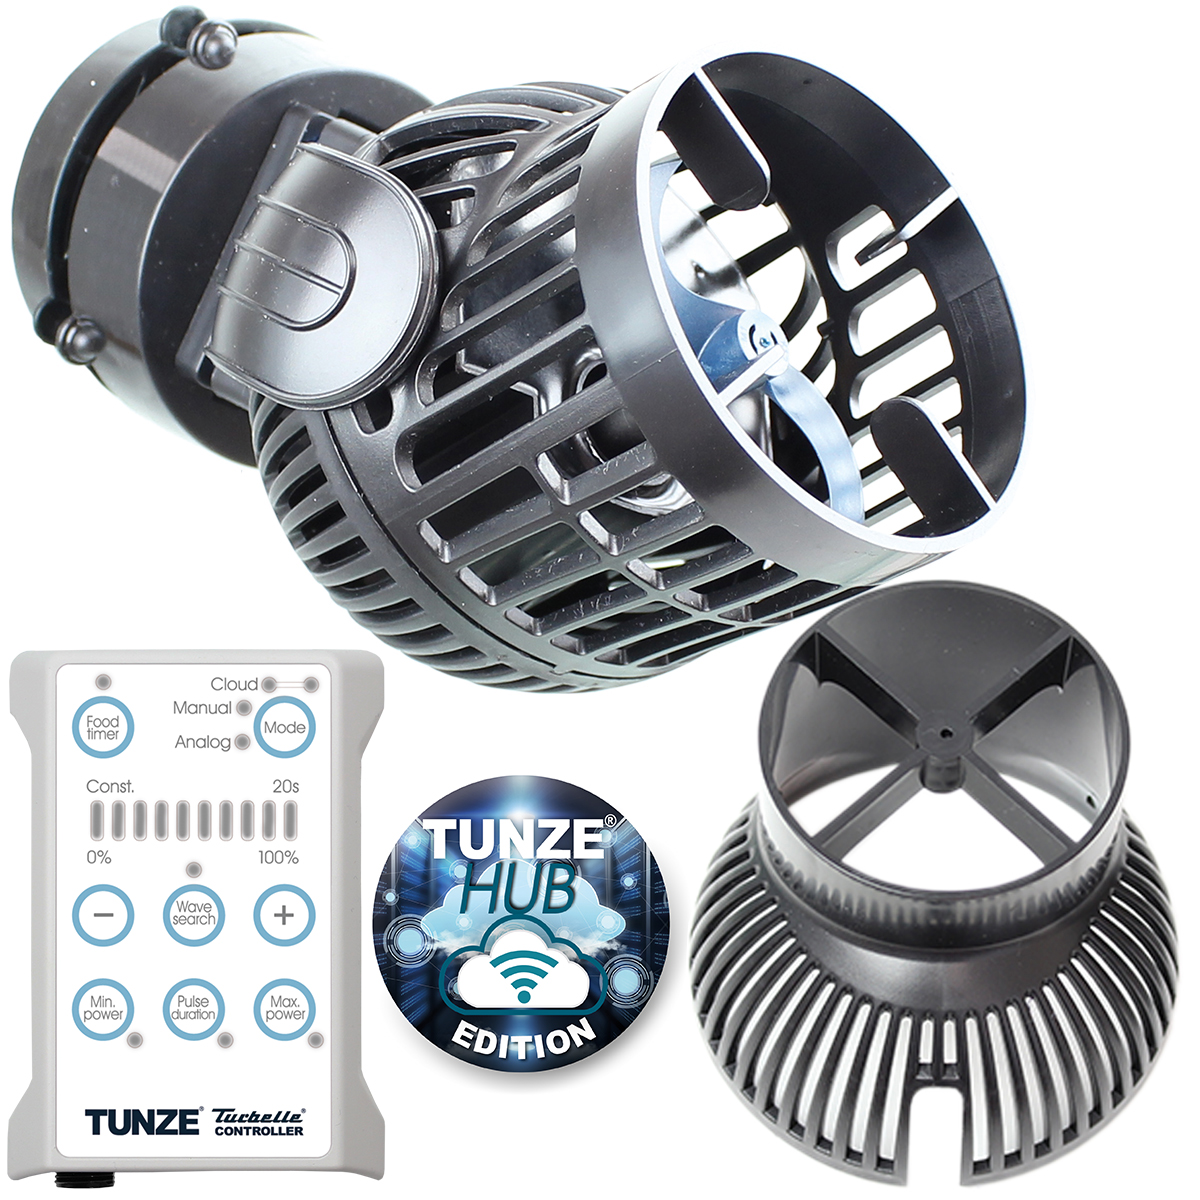 TUNZE Stream eco 6255 Hub Edition